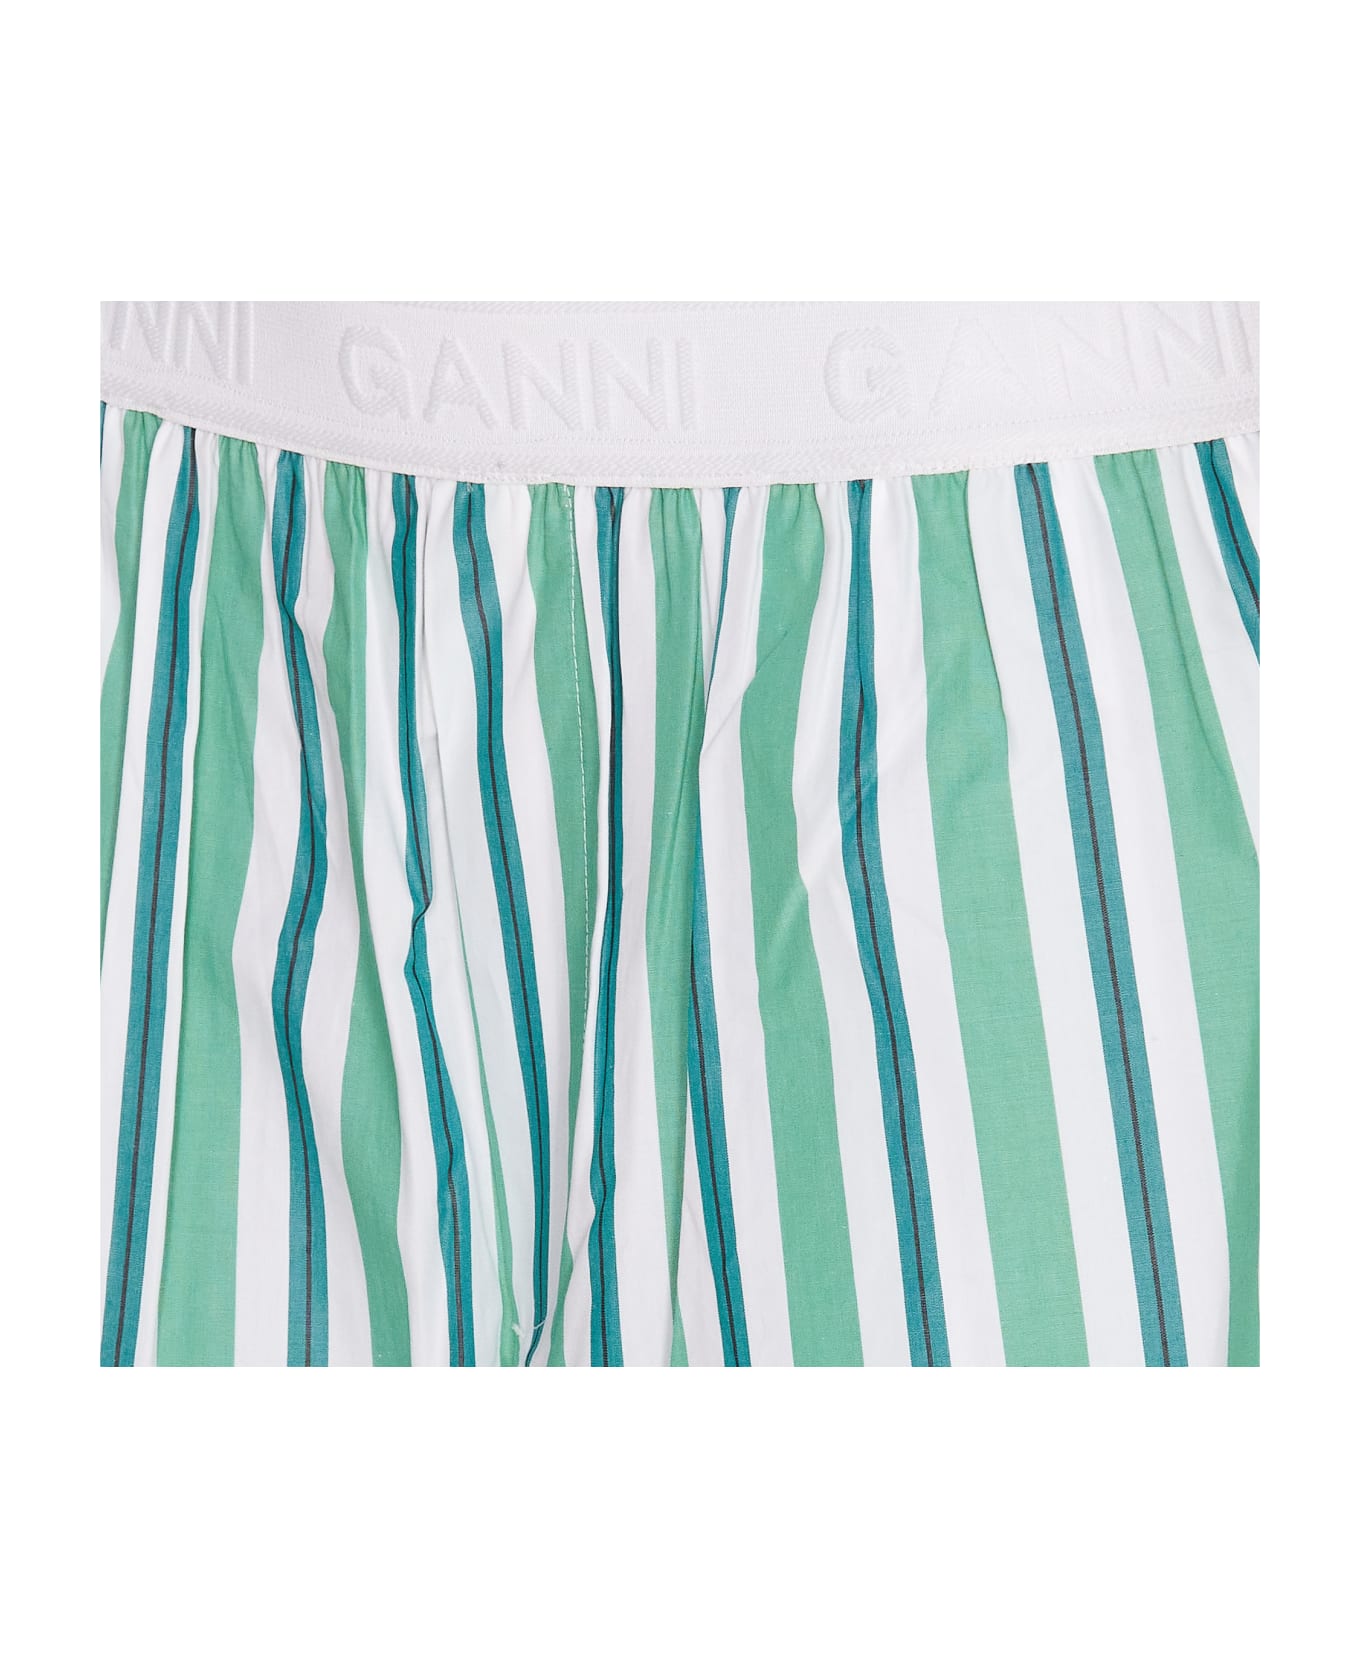 Ganni Striped Shorts - Cream